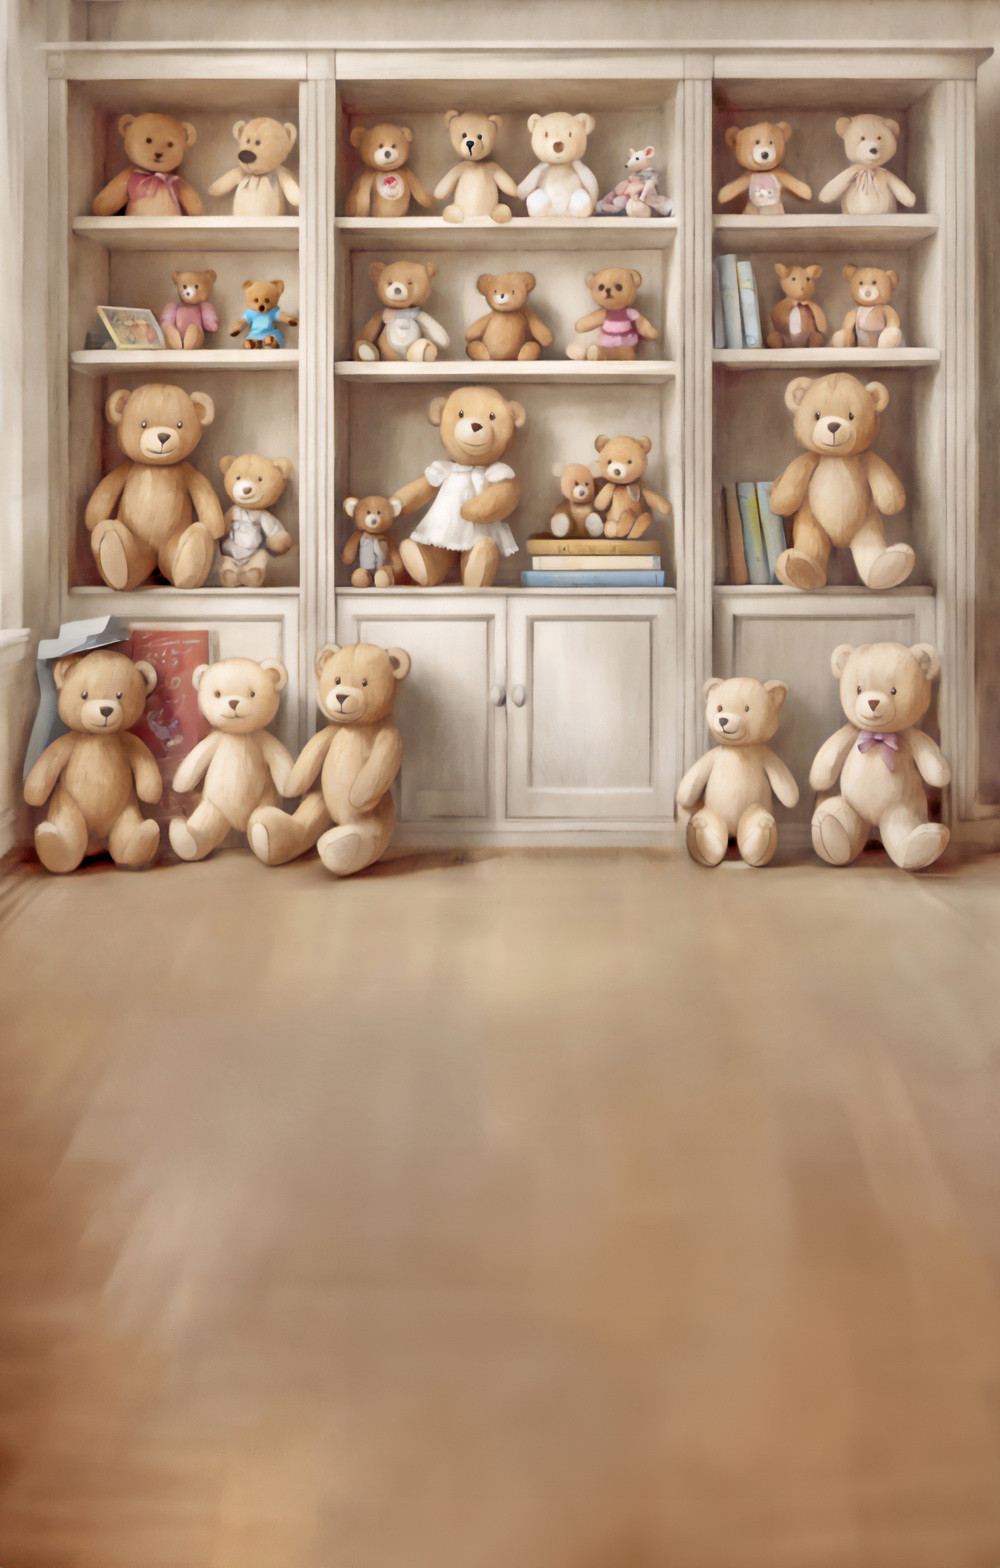 Combined backdrop "Shelves with teddybears"